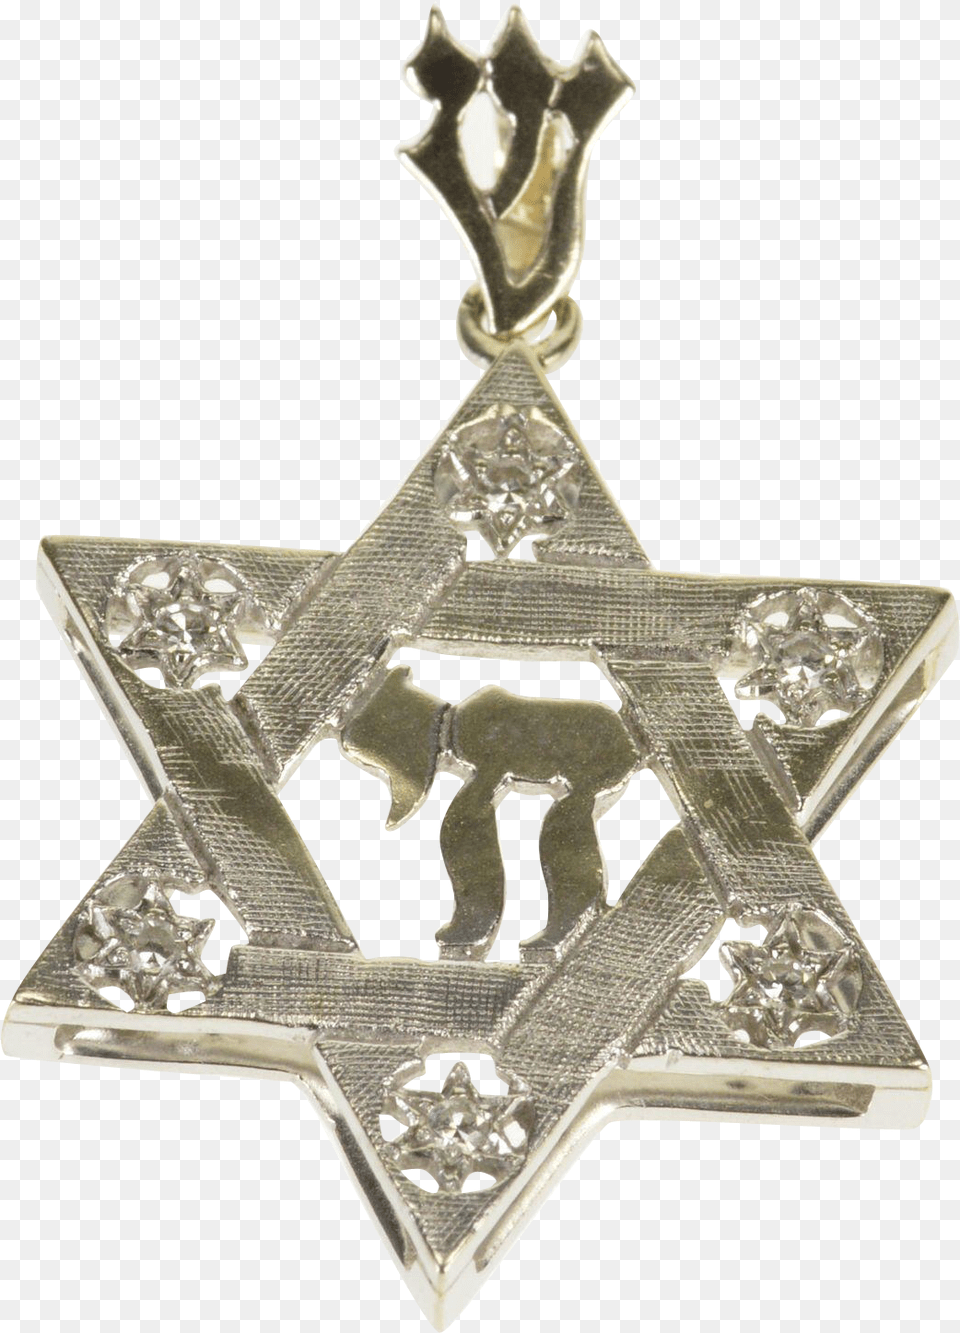 Download 14k Jewish Hebrew Chai Star Of David Diamond Symbol, Accessories, Pendant, Gemstone, Jewelry Png Image